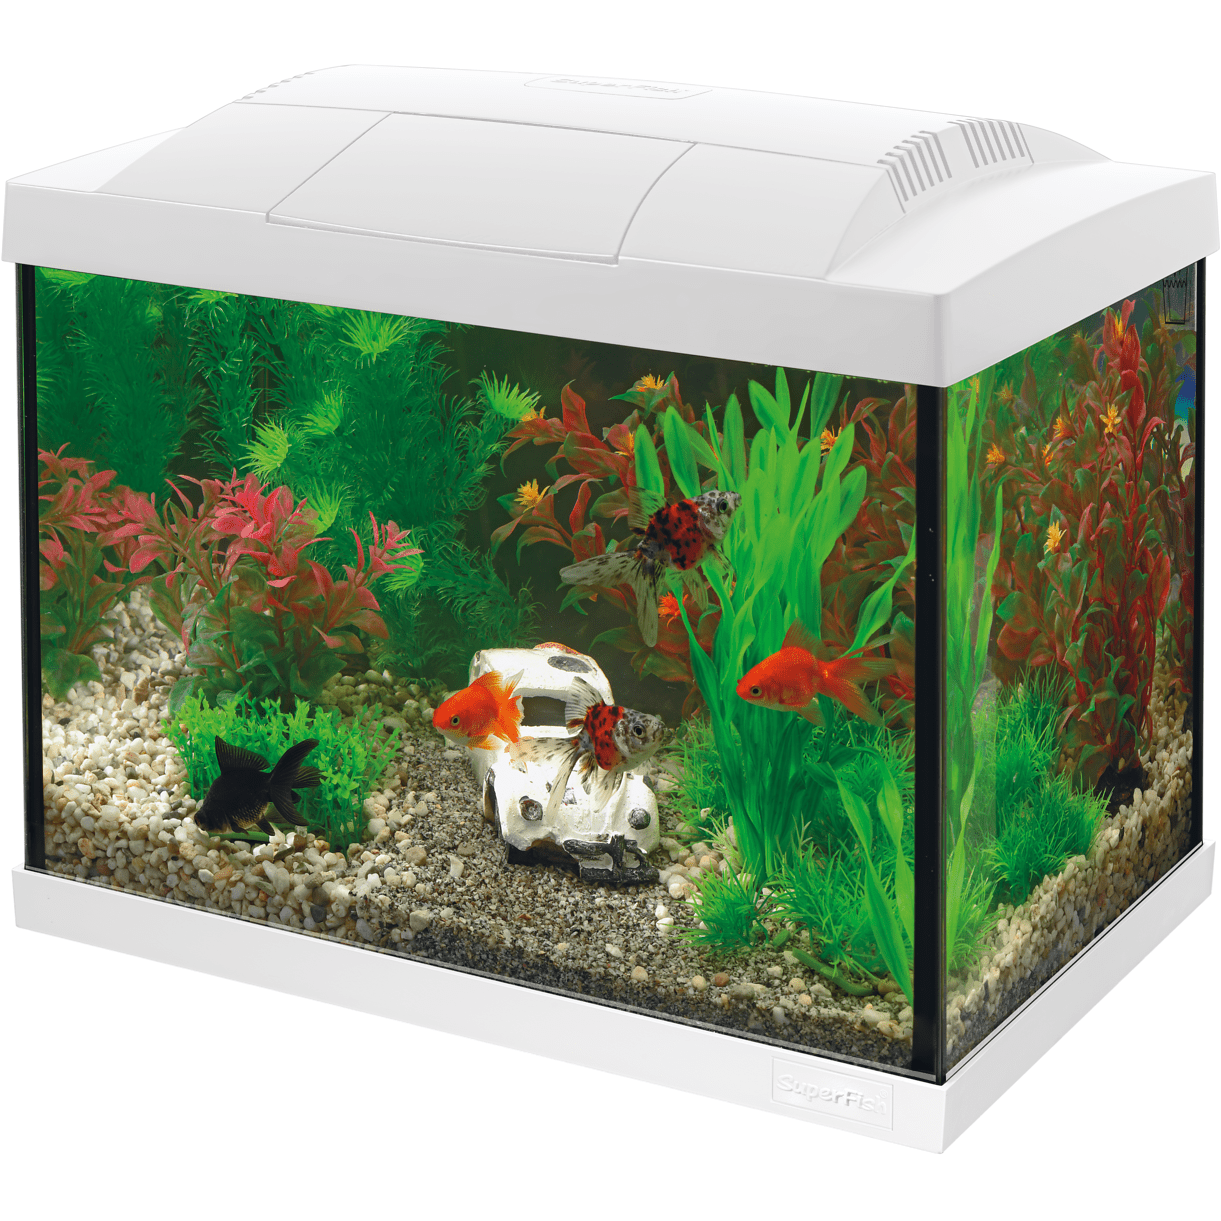 Les produits   Aquarium et meuble - Kit aquarium